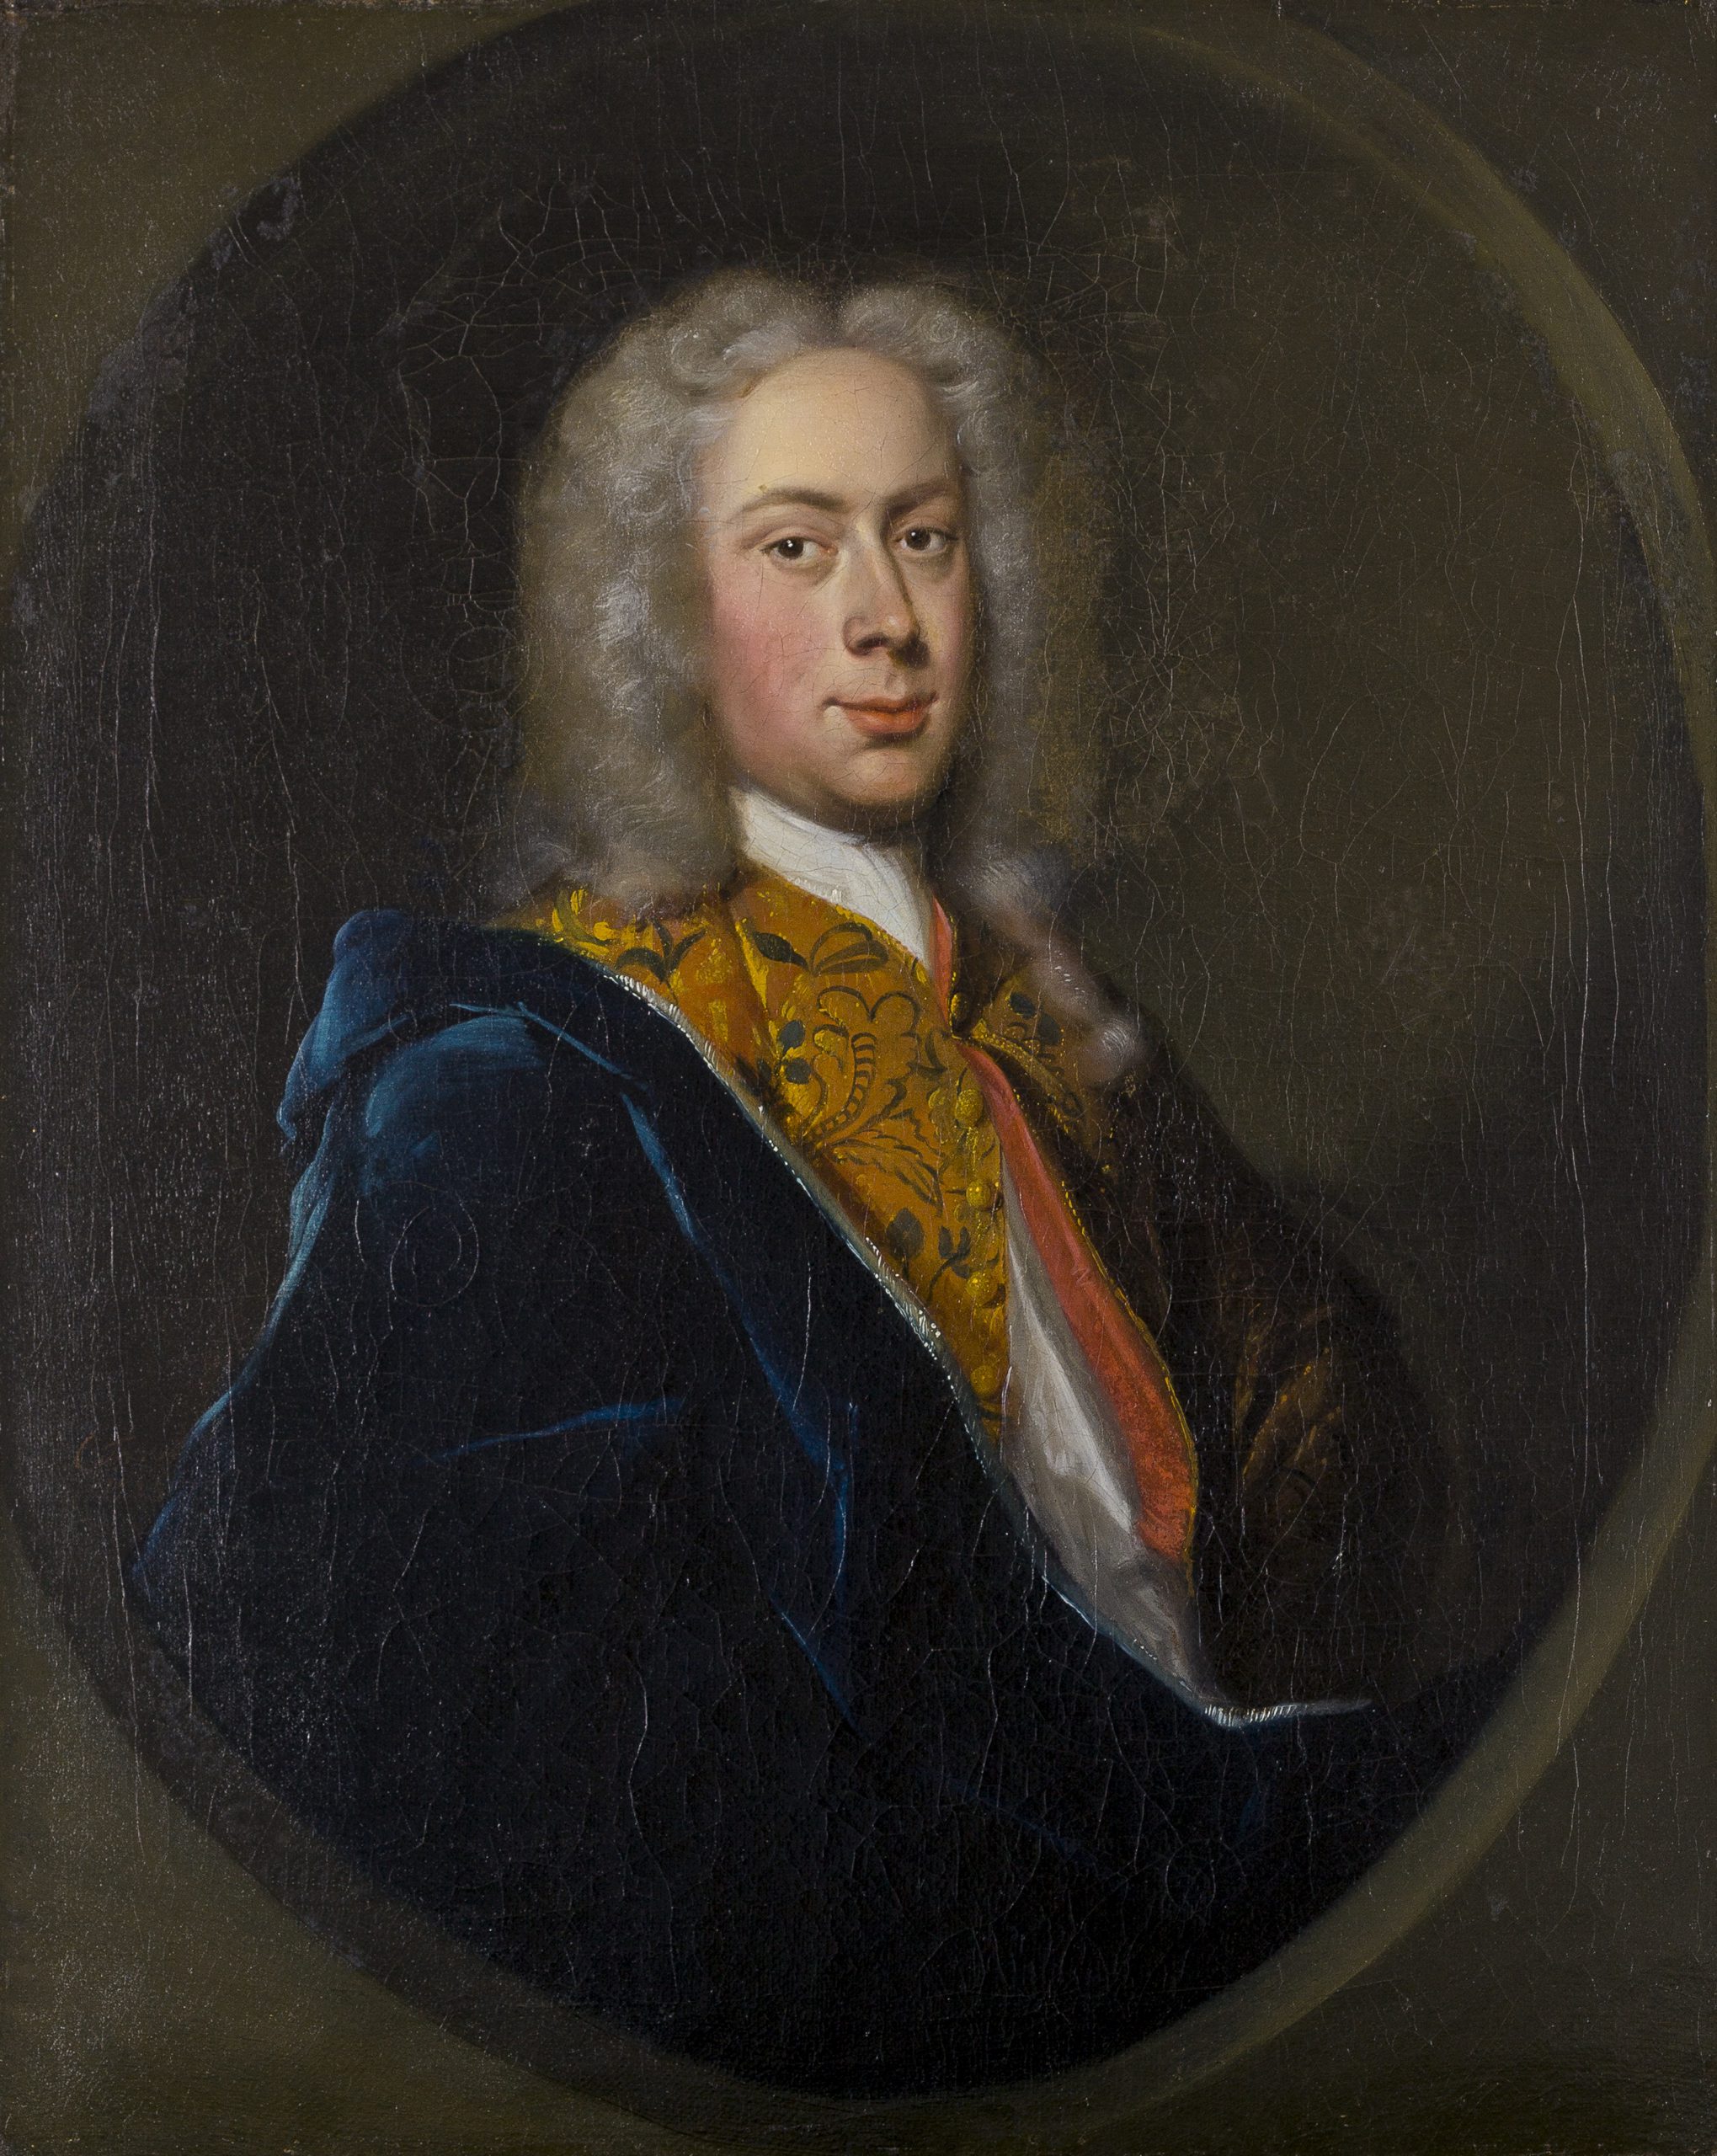 Cornelis Troost